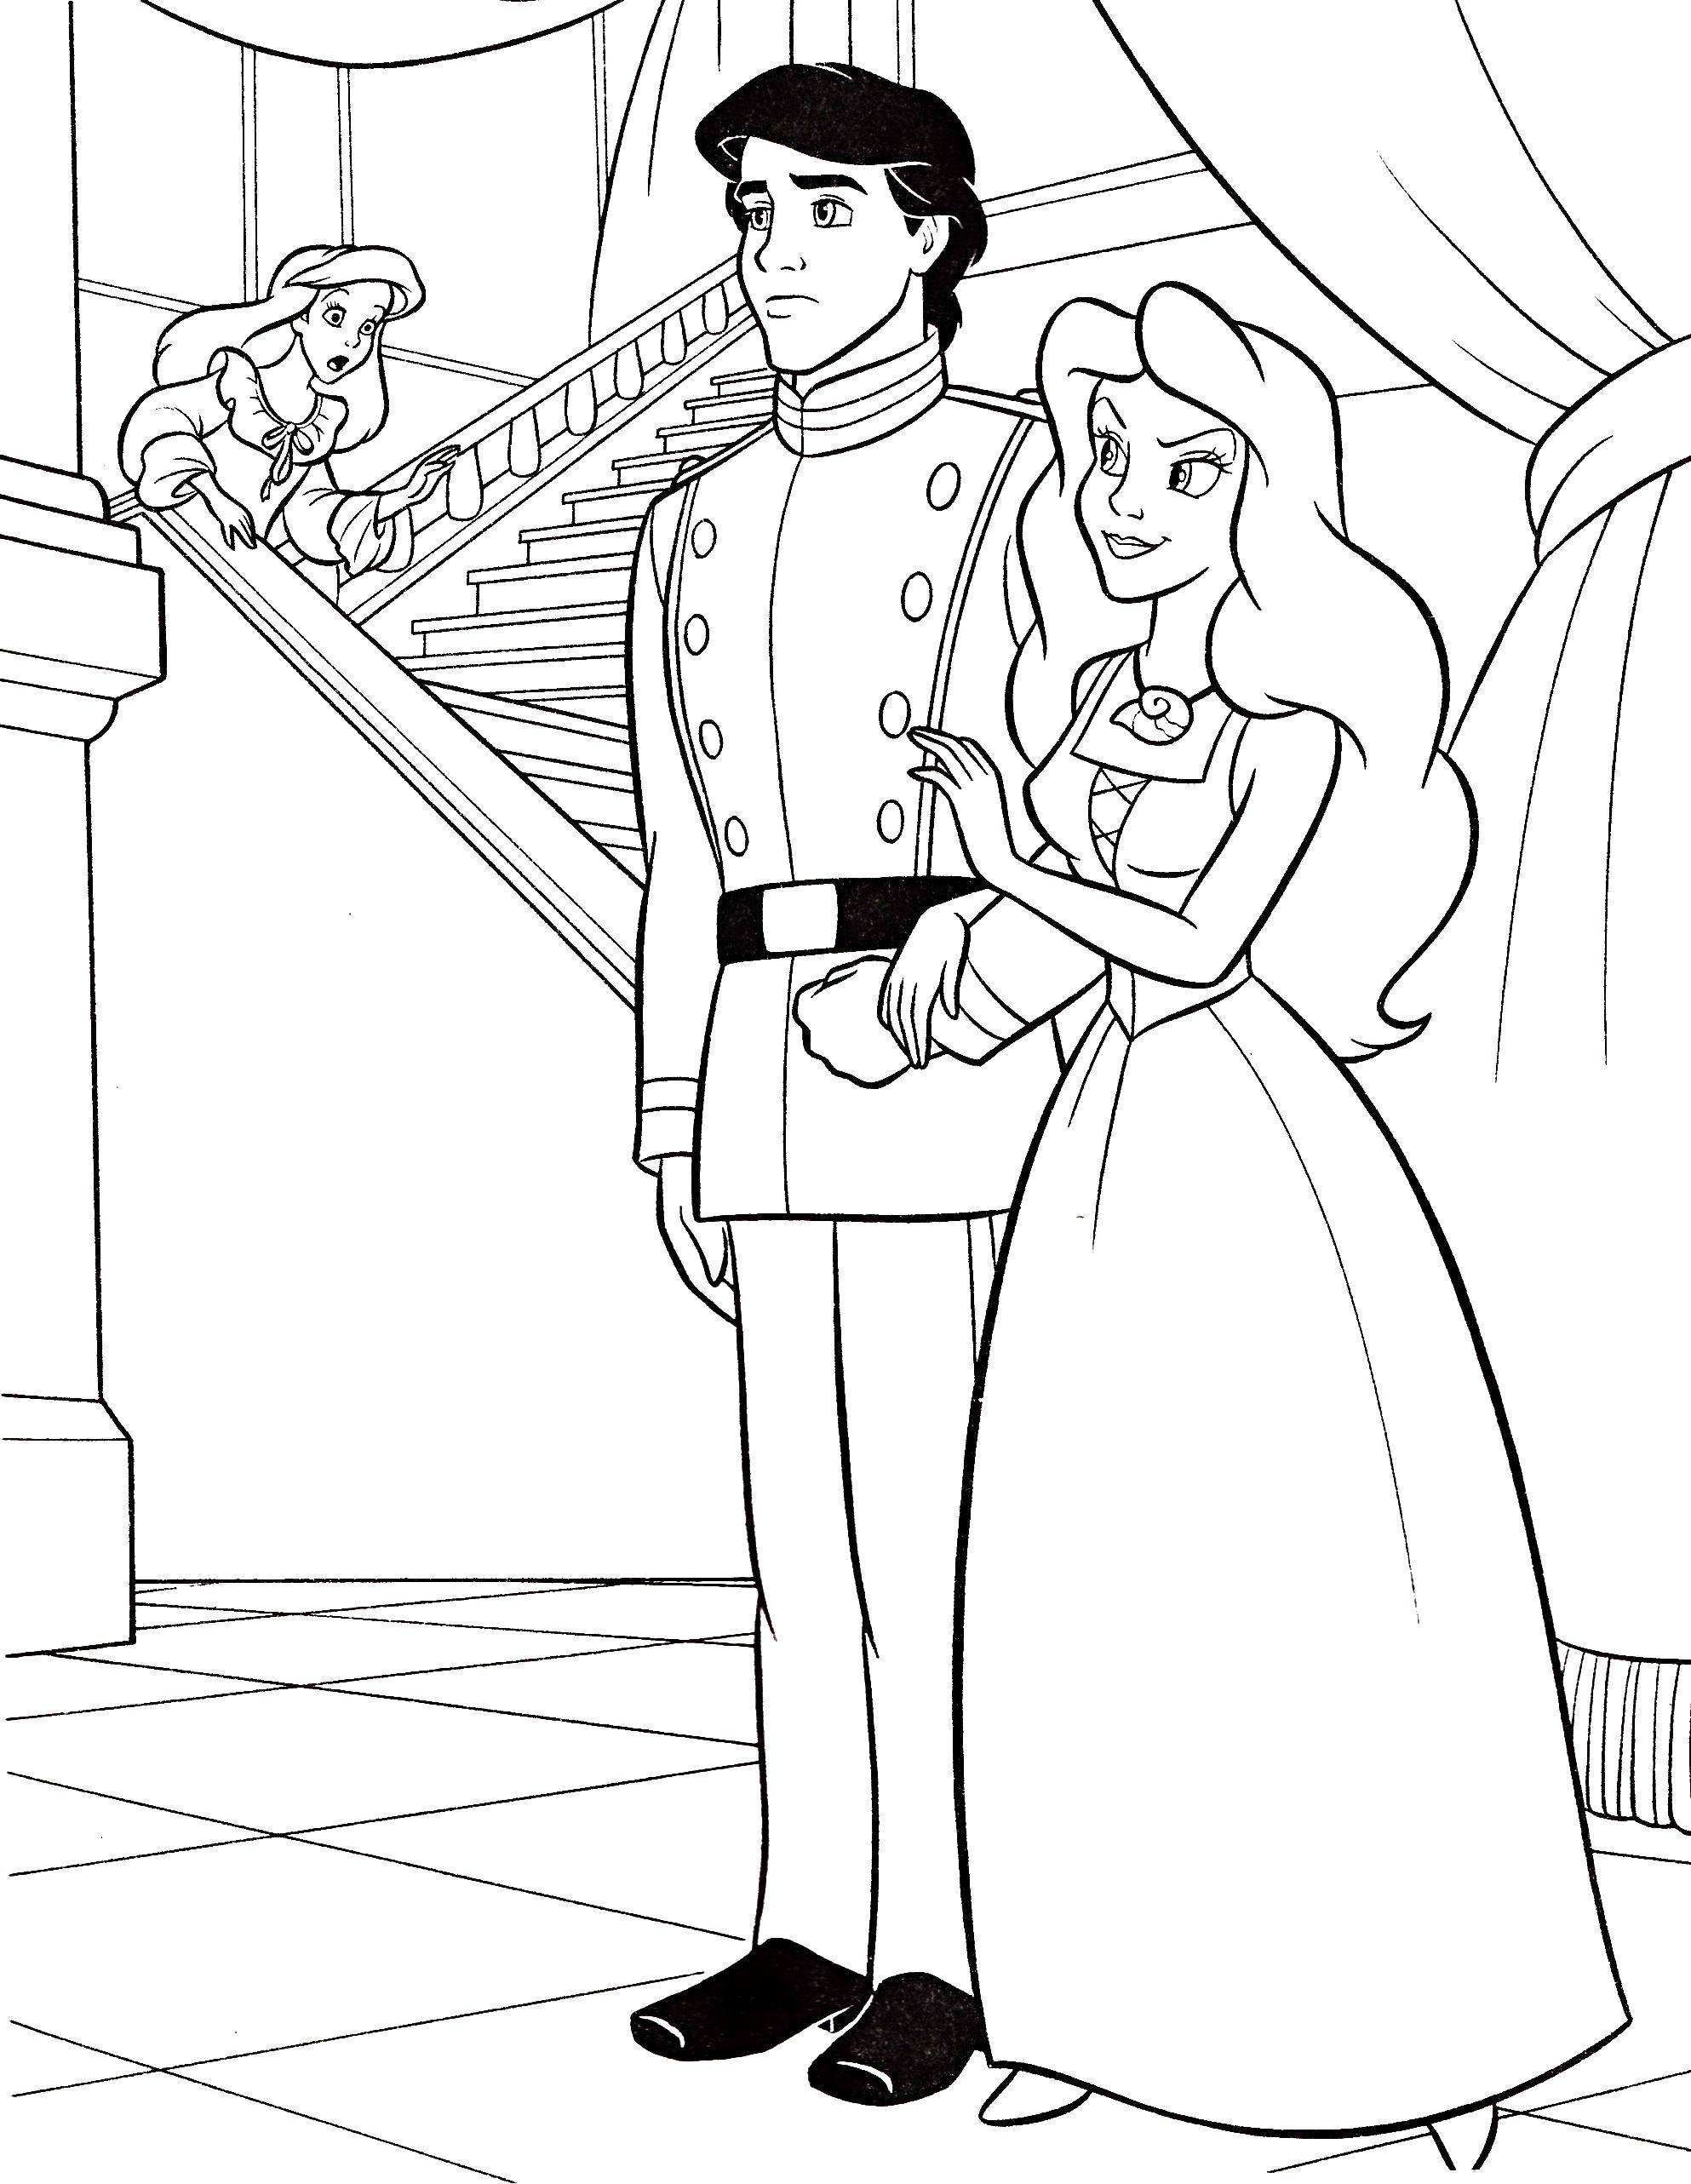 Coloring The Prince and evil Princess. Category Princess. Tags:  princesses, cartoons, fairy tales.